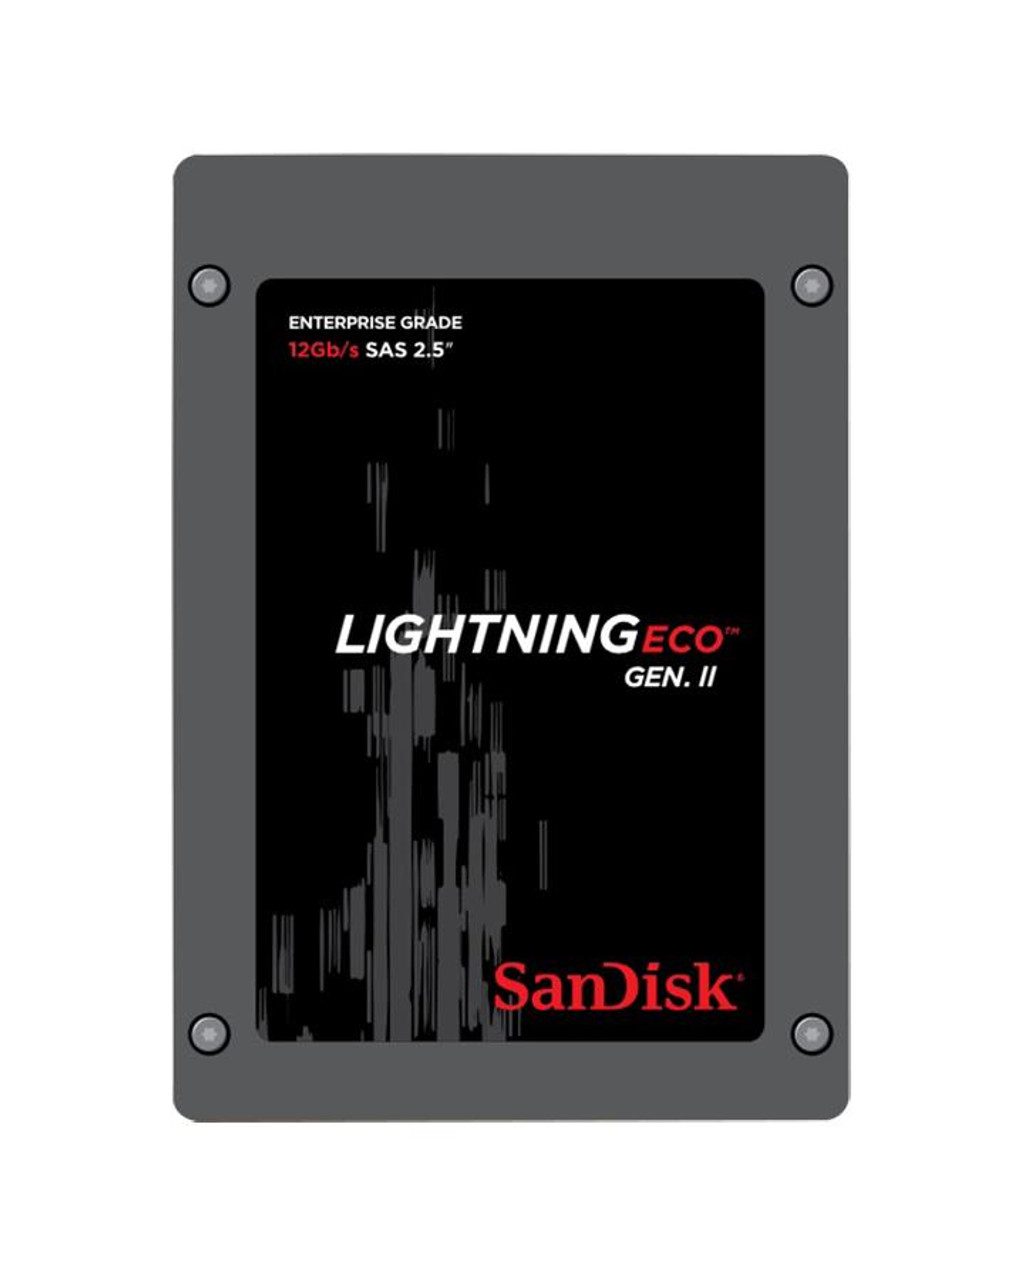 ODKR-800G-5C20 SanDisk Lightning Eco Gen II 800GB eMLC SAS 12Gbps (SED / ISE) 2.5-inch Internal Solid State Drive (SSD)